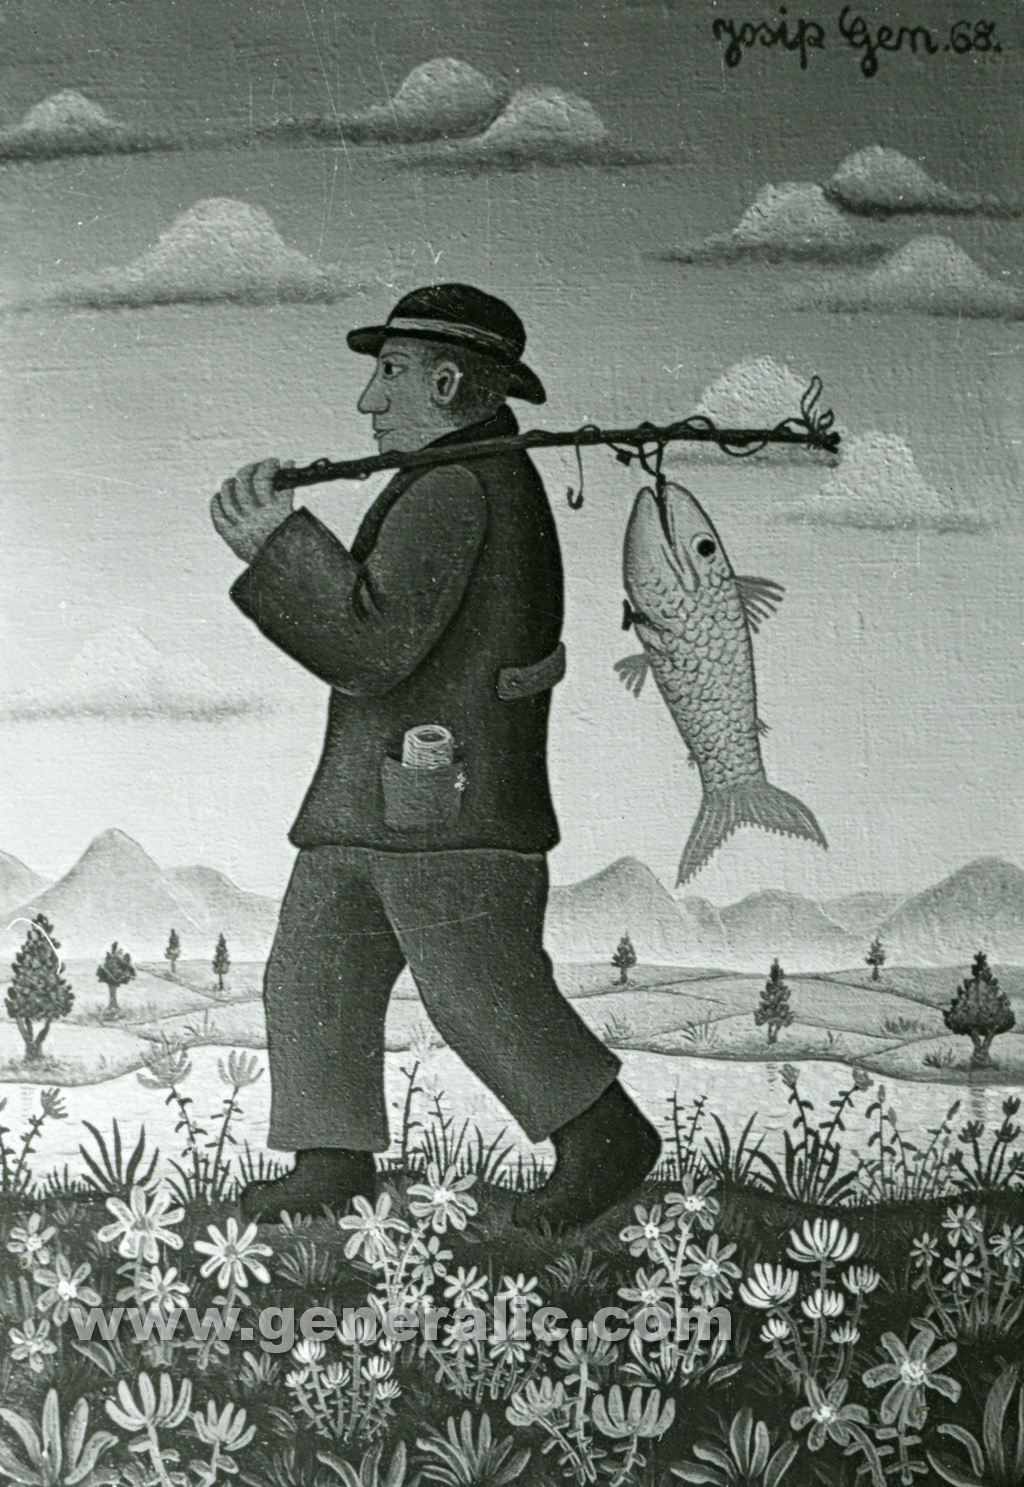 Josip Generalic, 1968, Fisherman, oil on canvas